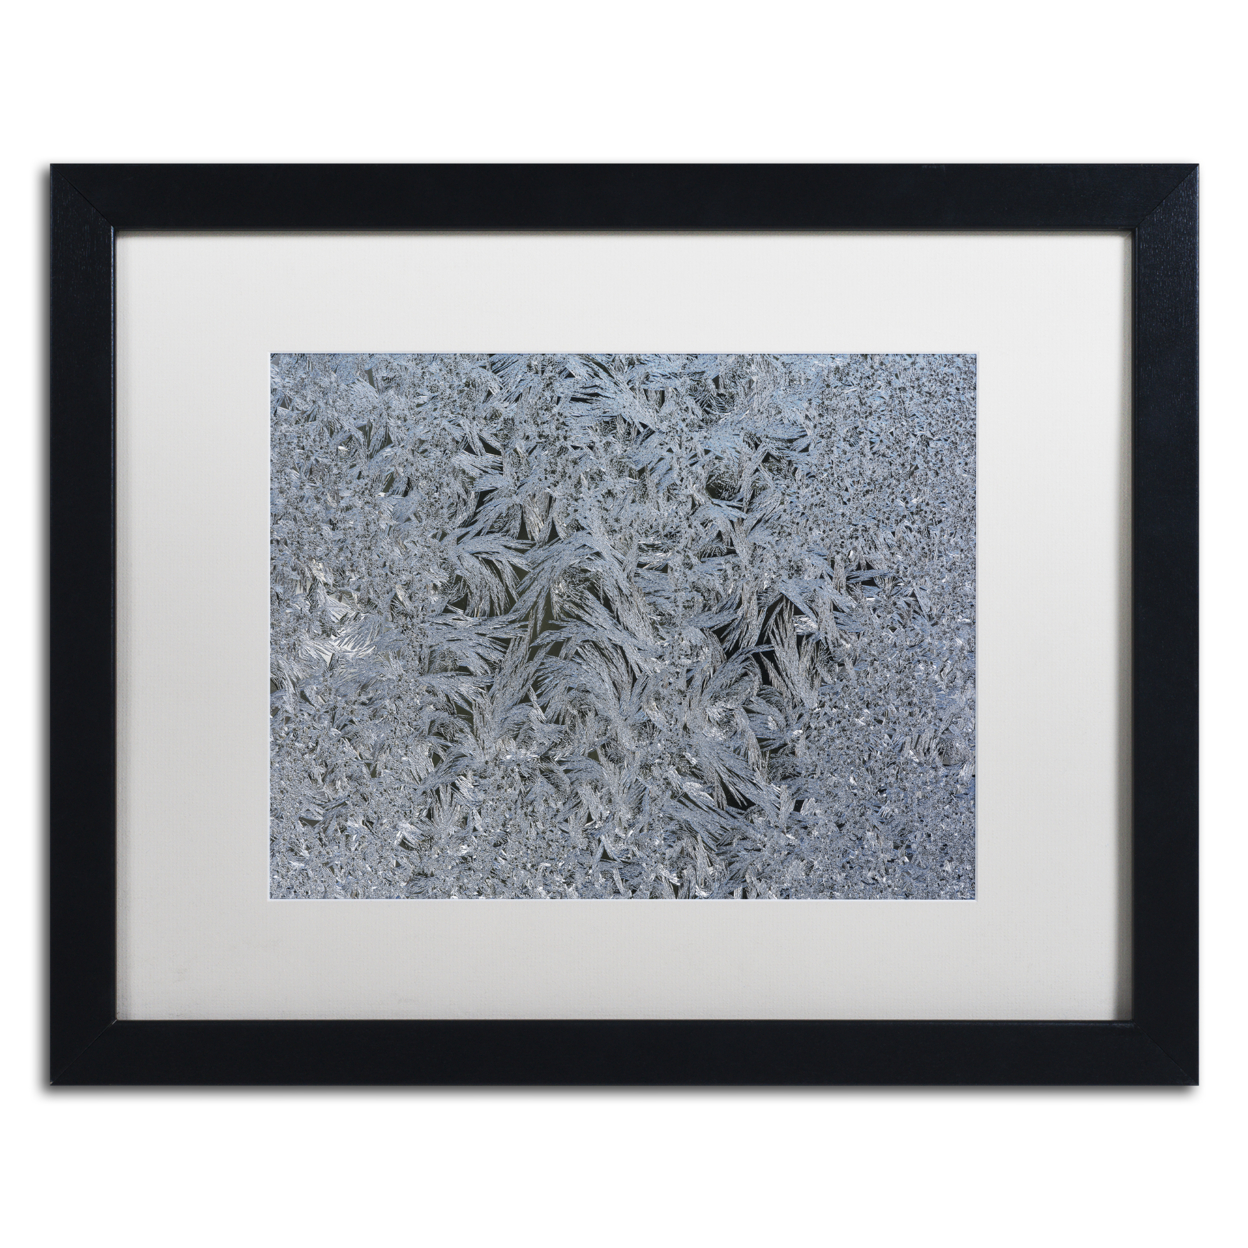 Kurt Shaffer 'Window Frosting' Black Wooden Framed Art 18 X 22 Inches